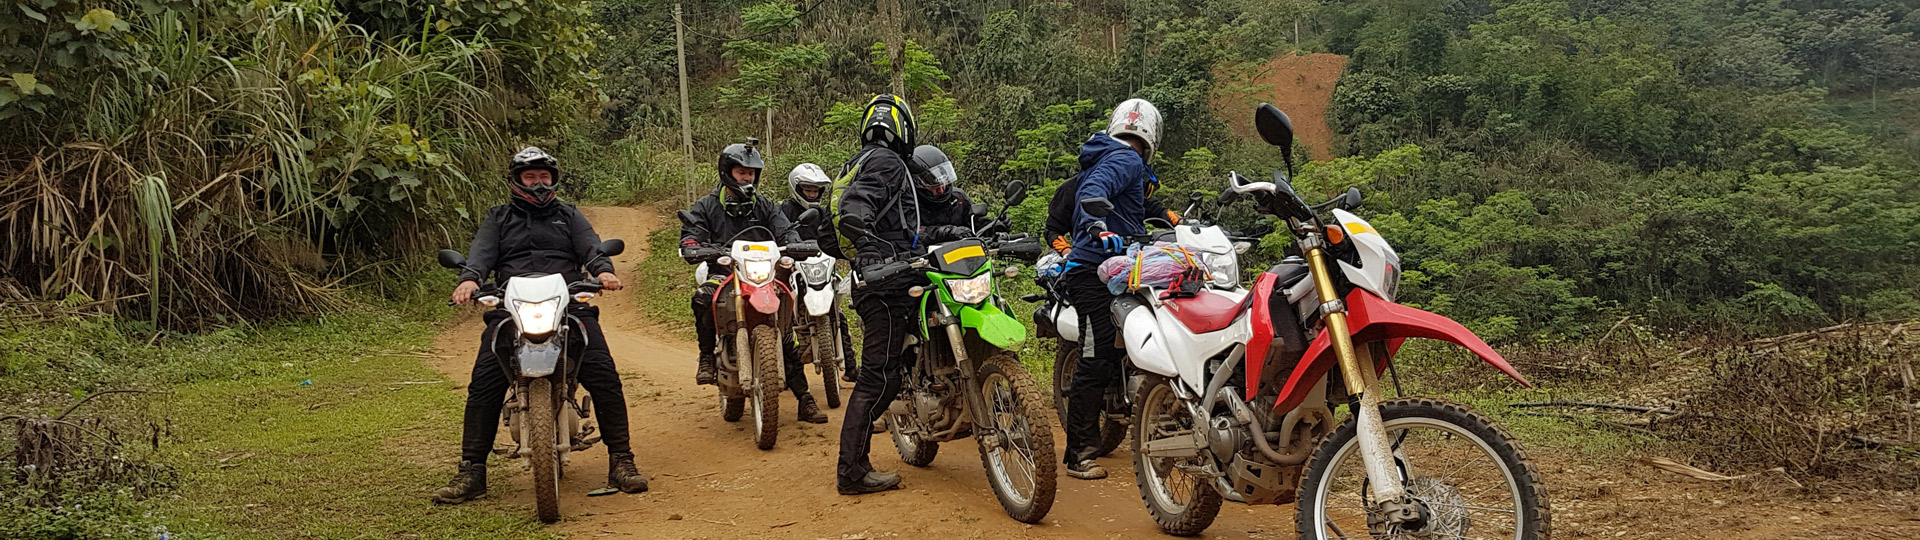 Laos Motorbike Tours 4